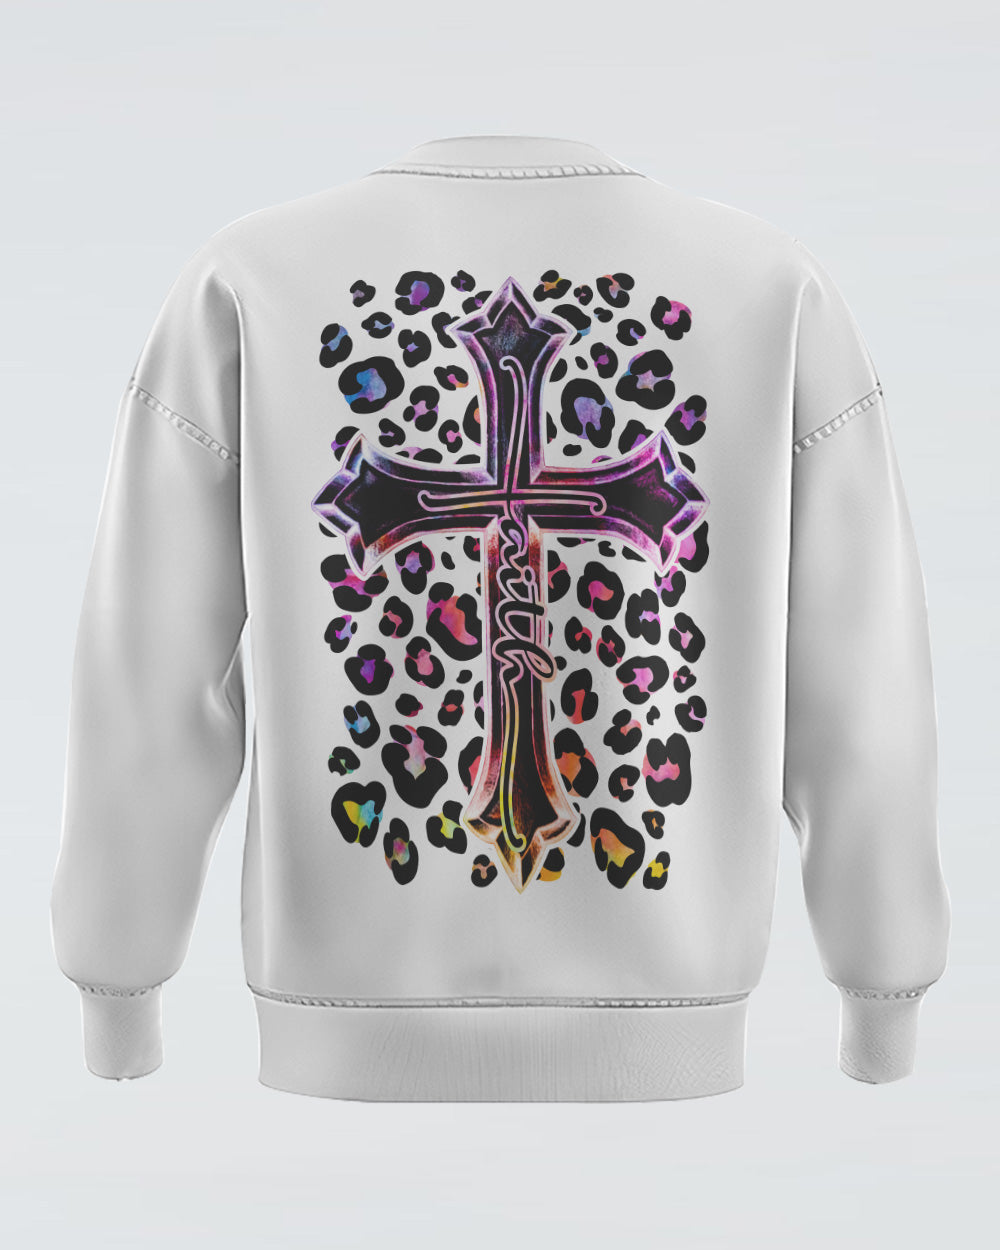 Cross Faith Leopard White Women's Christian Sweatshirt